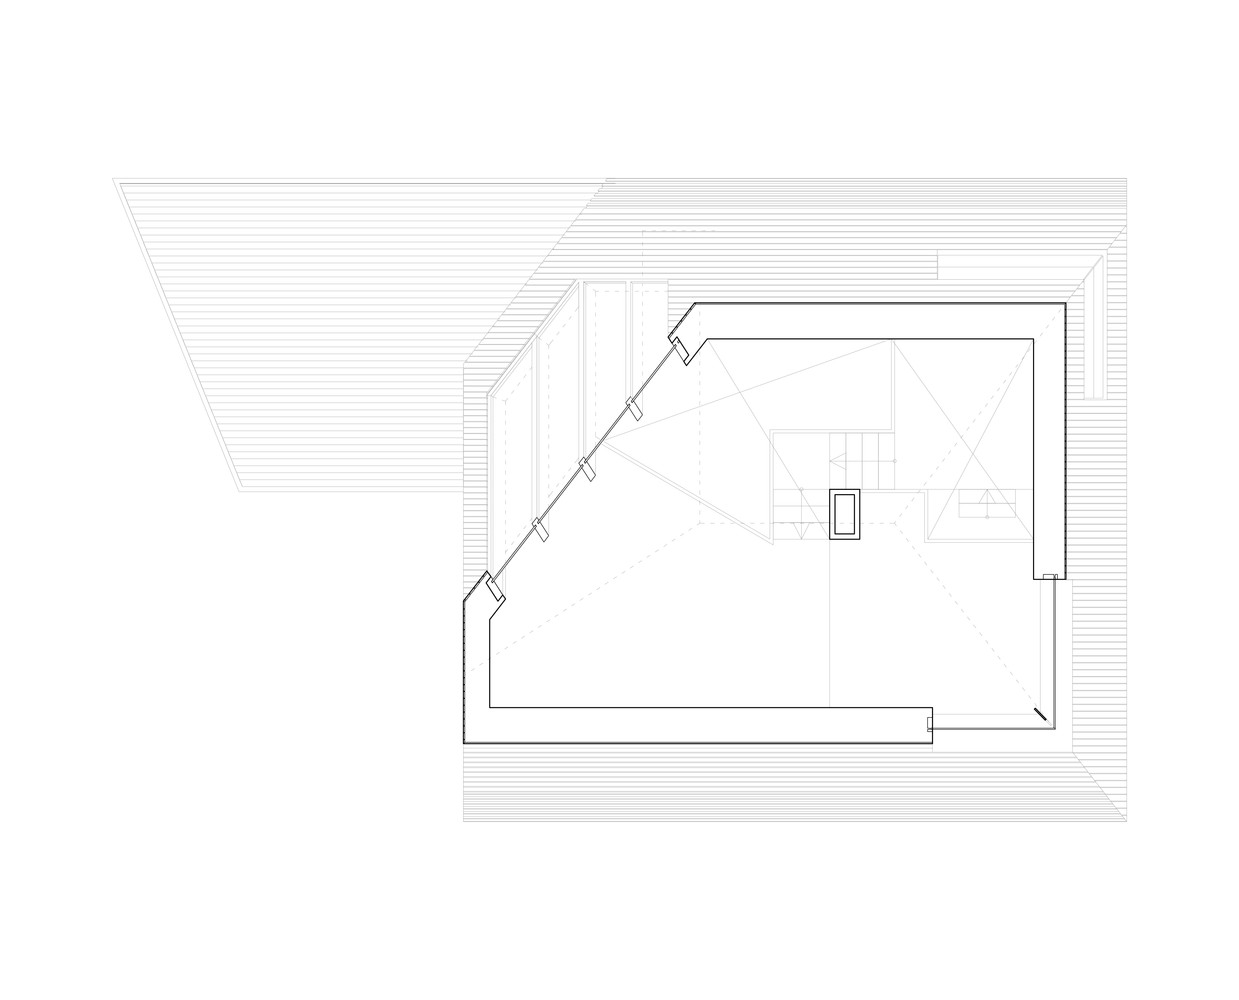 First_Floor_Plan.jpg